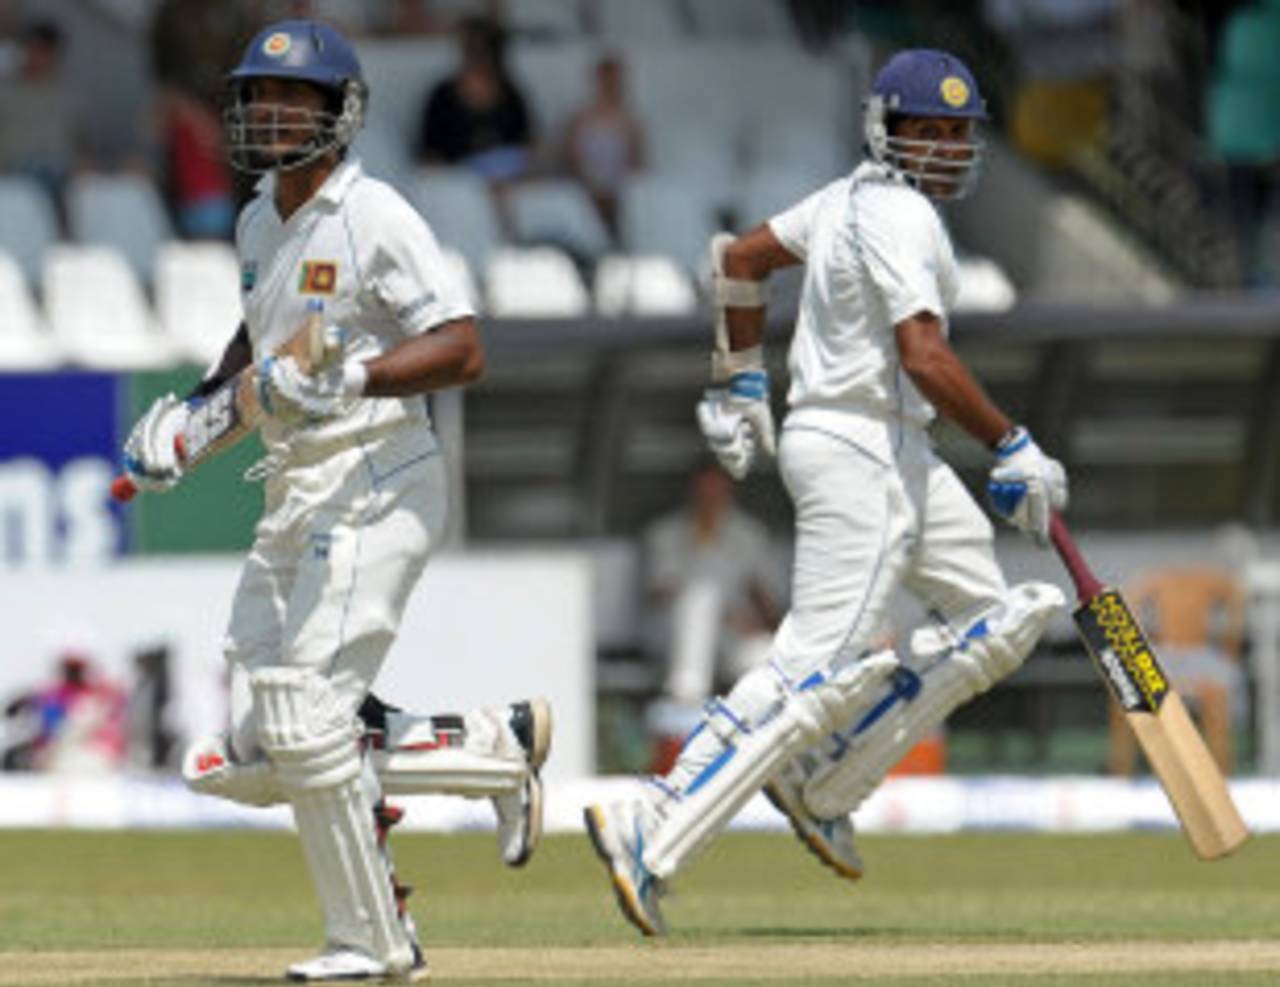 Mahela Jayawardene and Kumar Sangakkara put on 101 for the third wicket, Sri Lanka v Australia, 3rd Test, SSC, Colombo, 3rd day, September 18, 2011